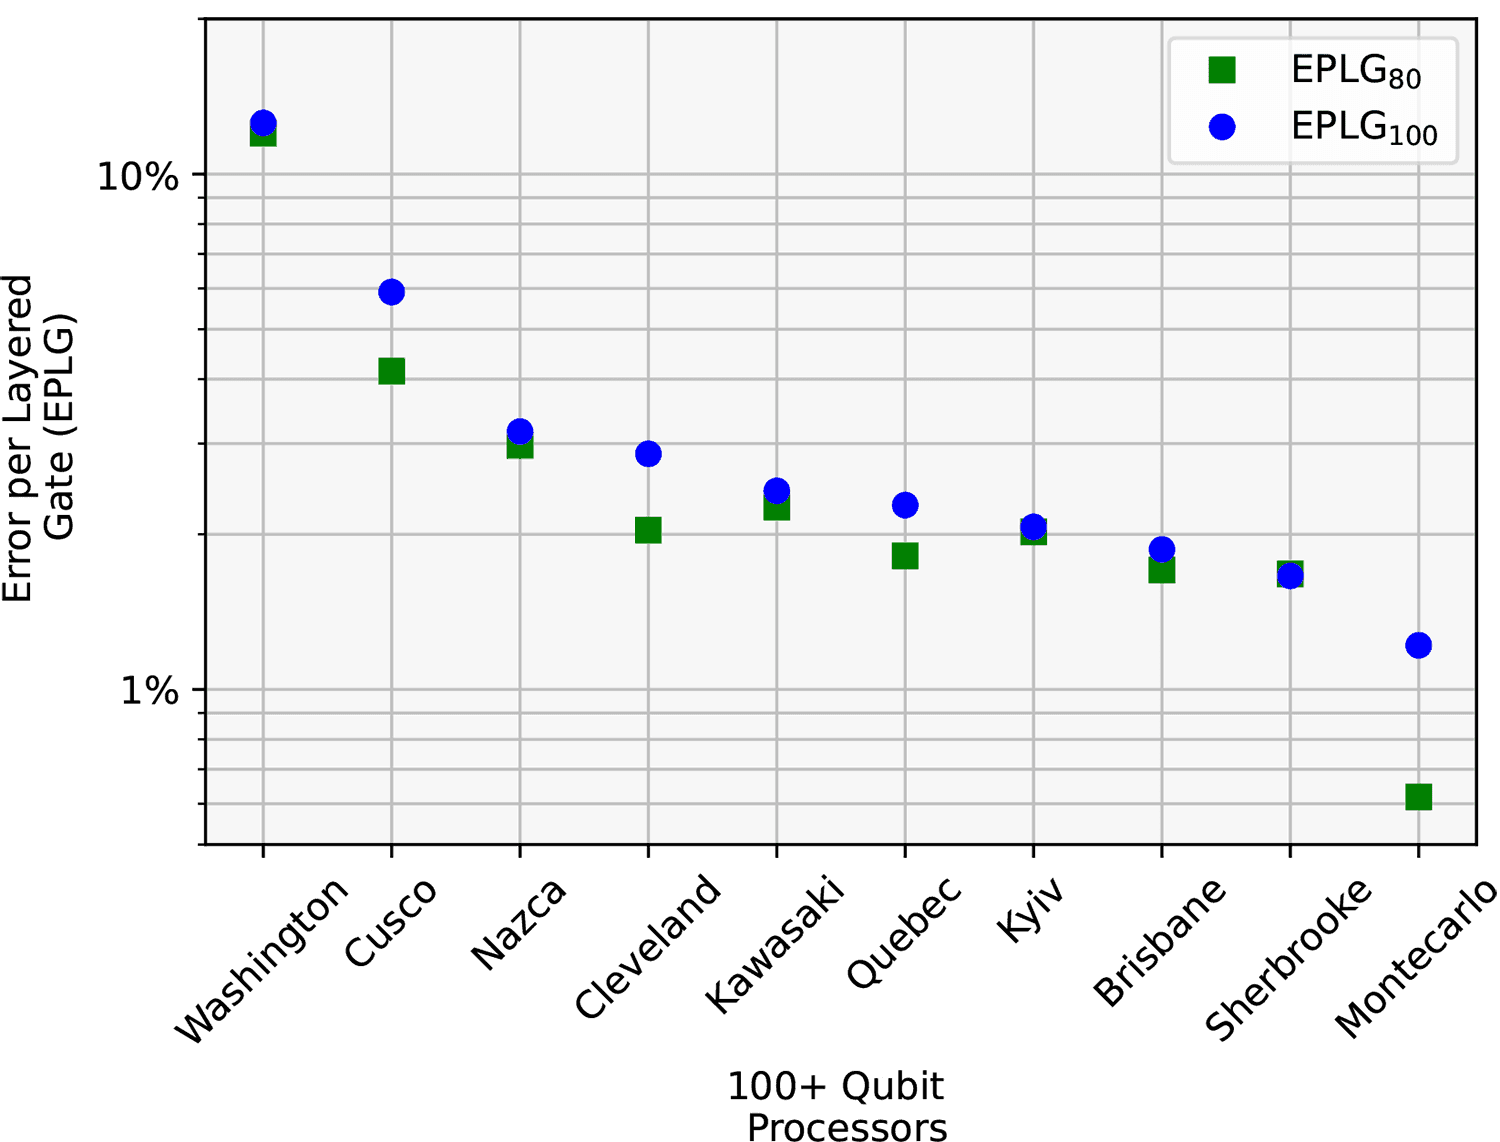 Error-per-layered-gate measurement, per processors with 100 more qubits.